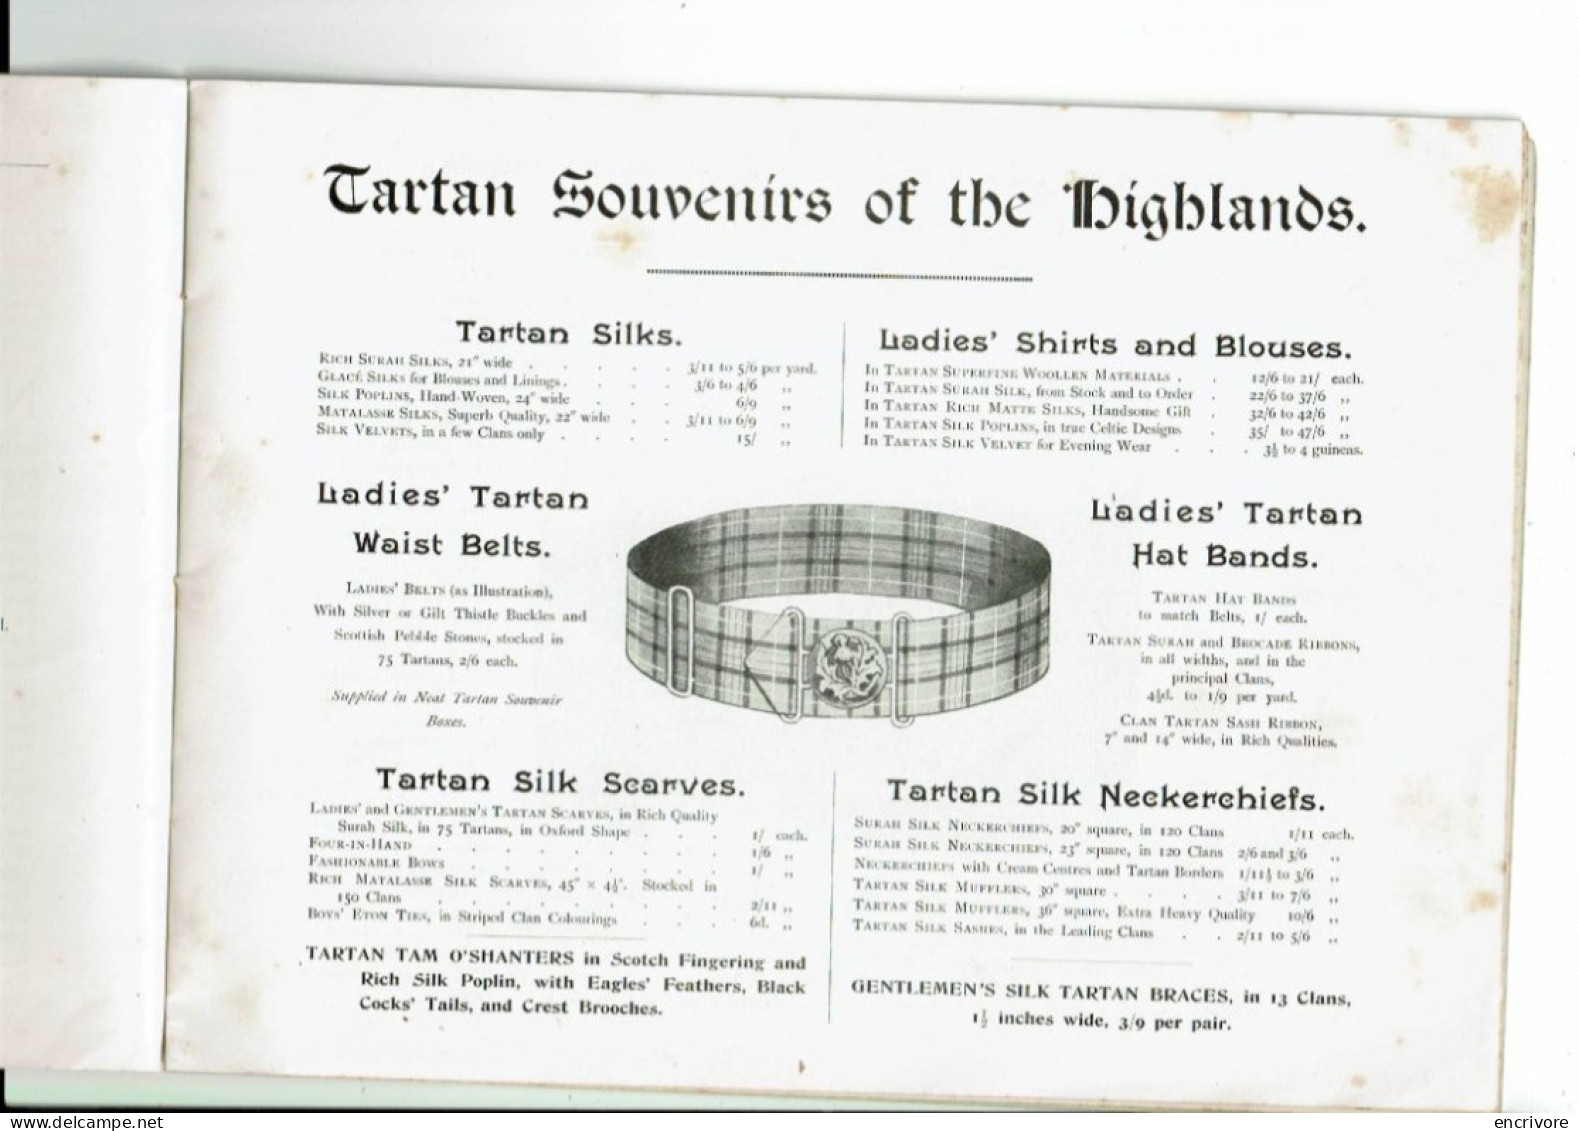 W. CHALMERS The Royal Tartan & Highland Tweet Warehouse OBAN - Toeristische Brochures